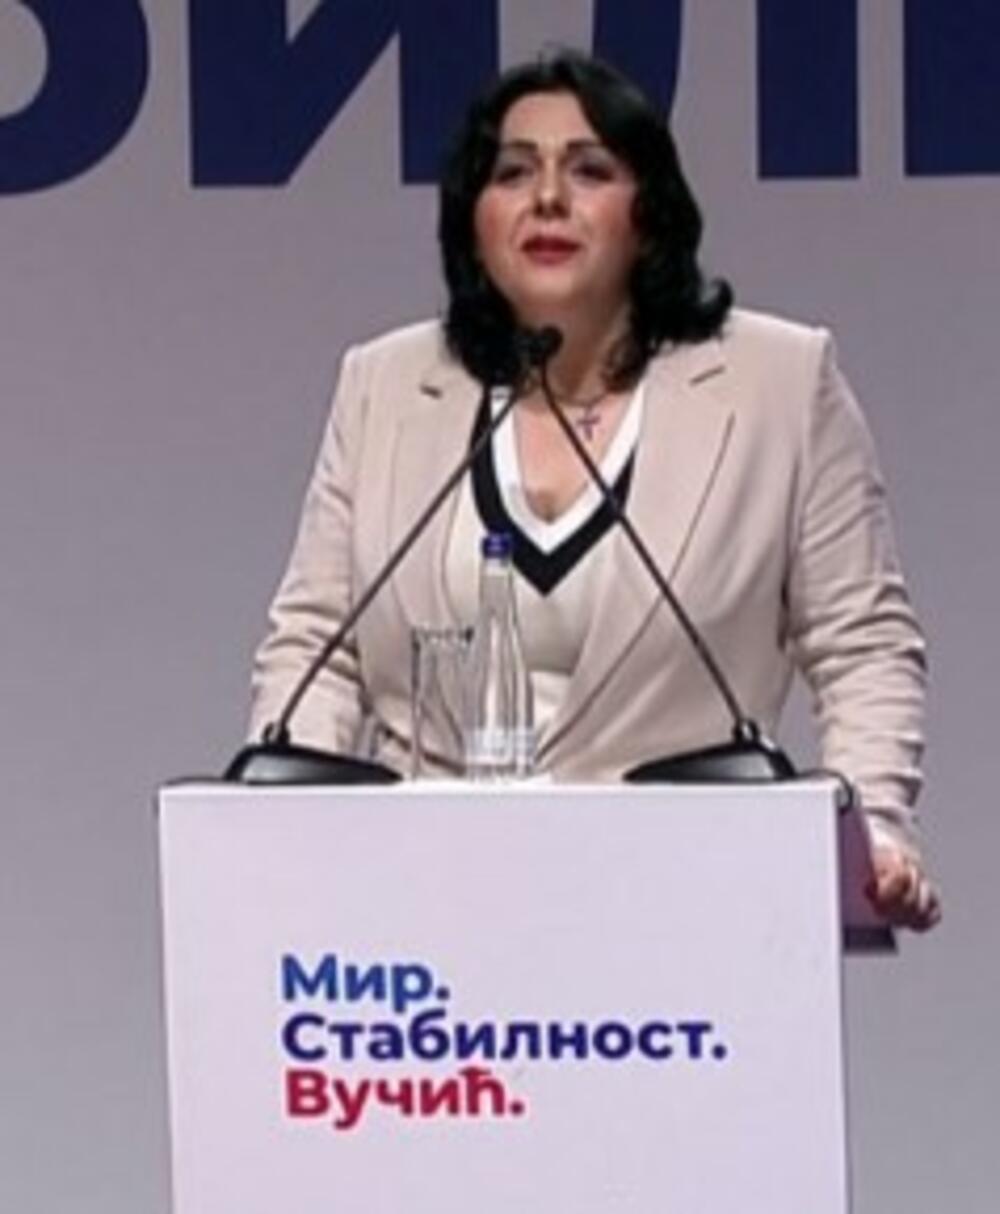 Marija Zdravković